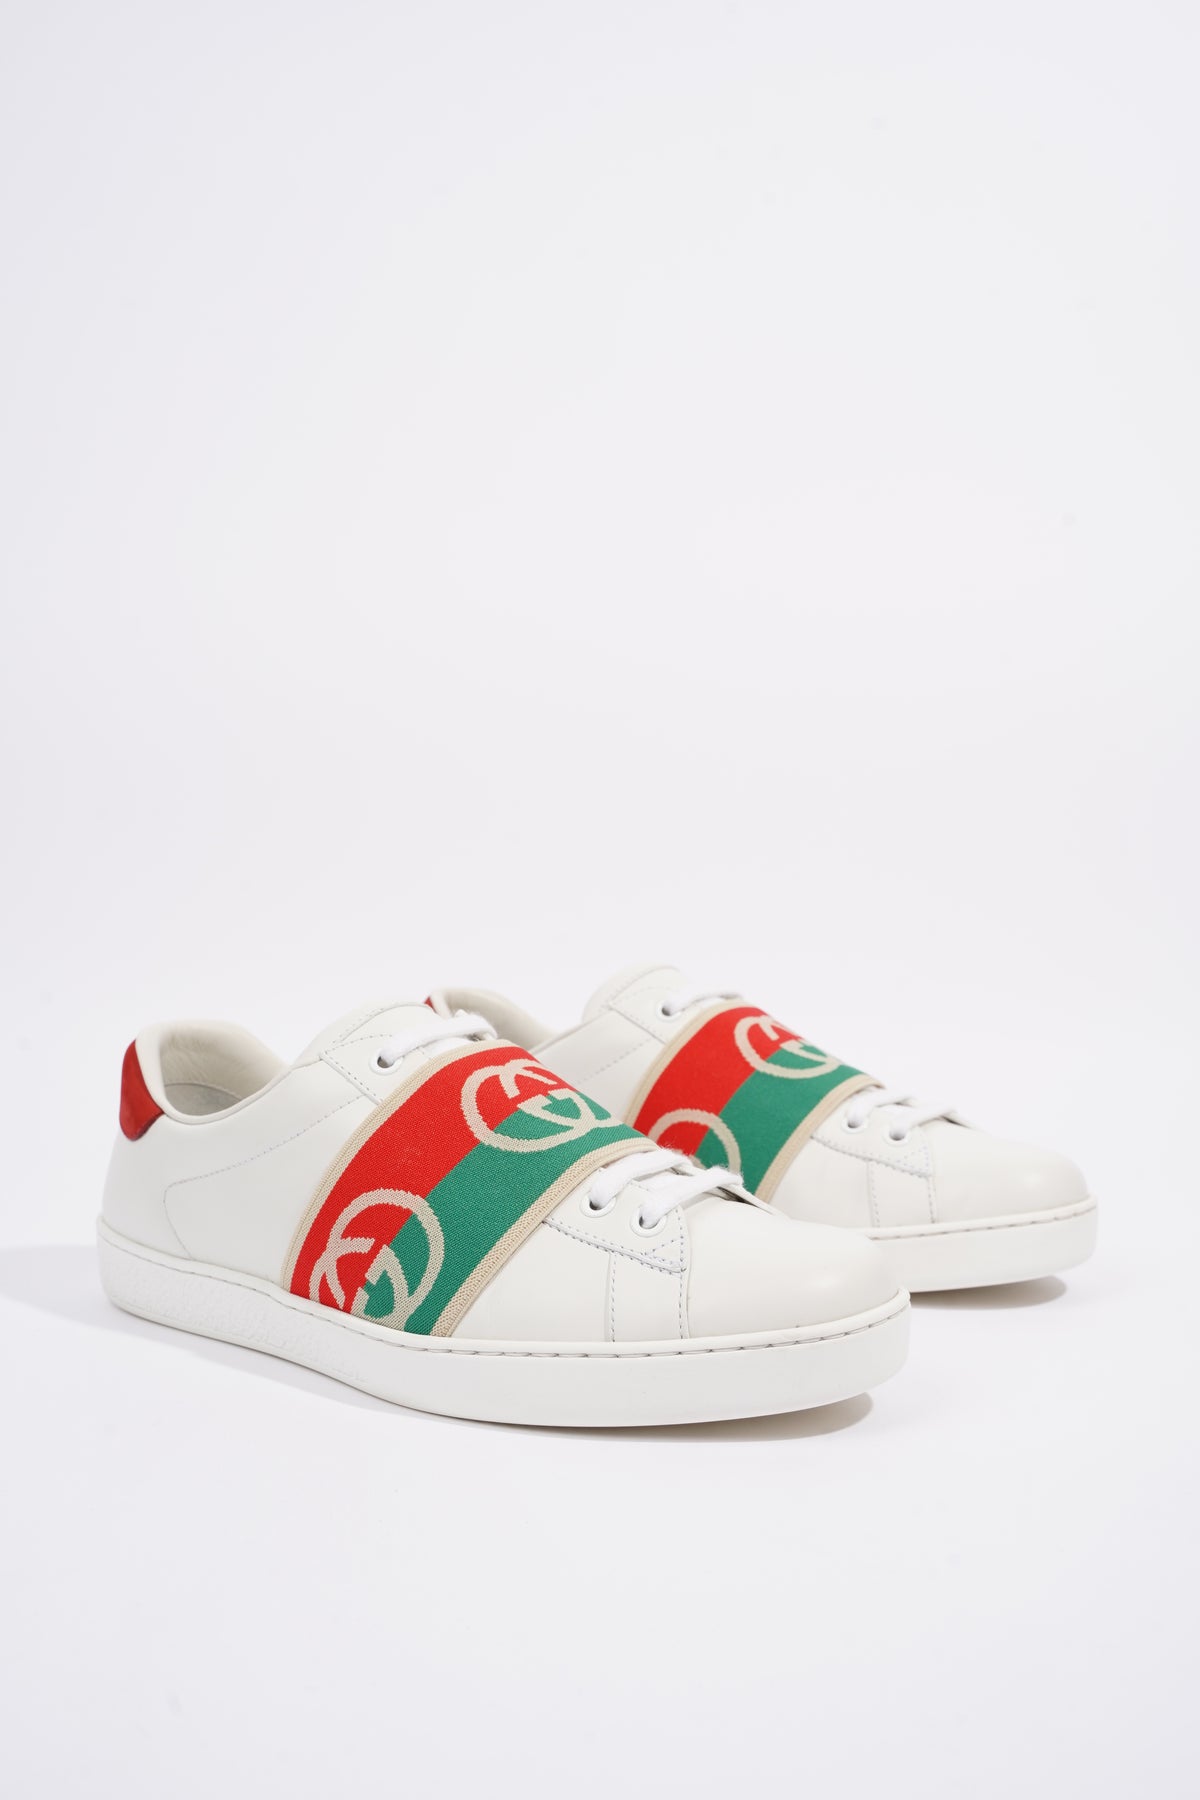 Gucci, Shoes, Mens Gucci Ace Sneaker White W Greenred